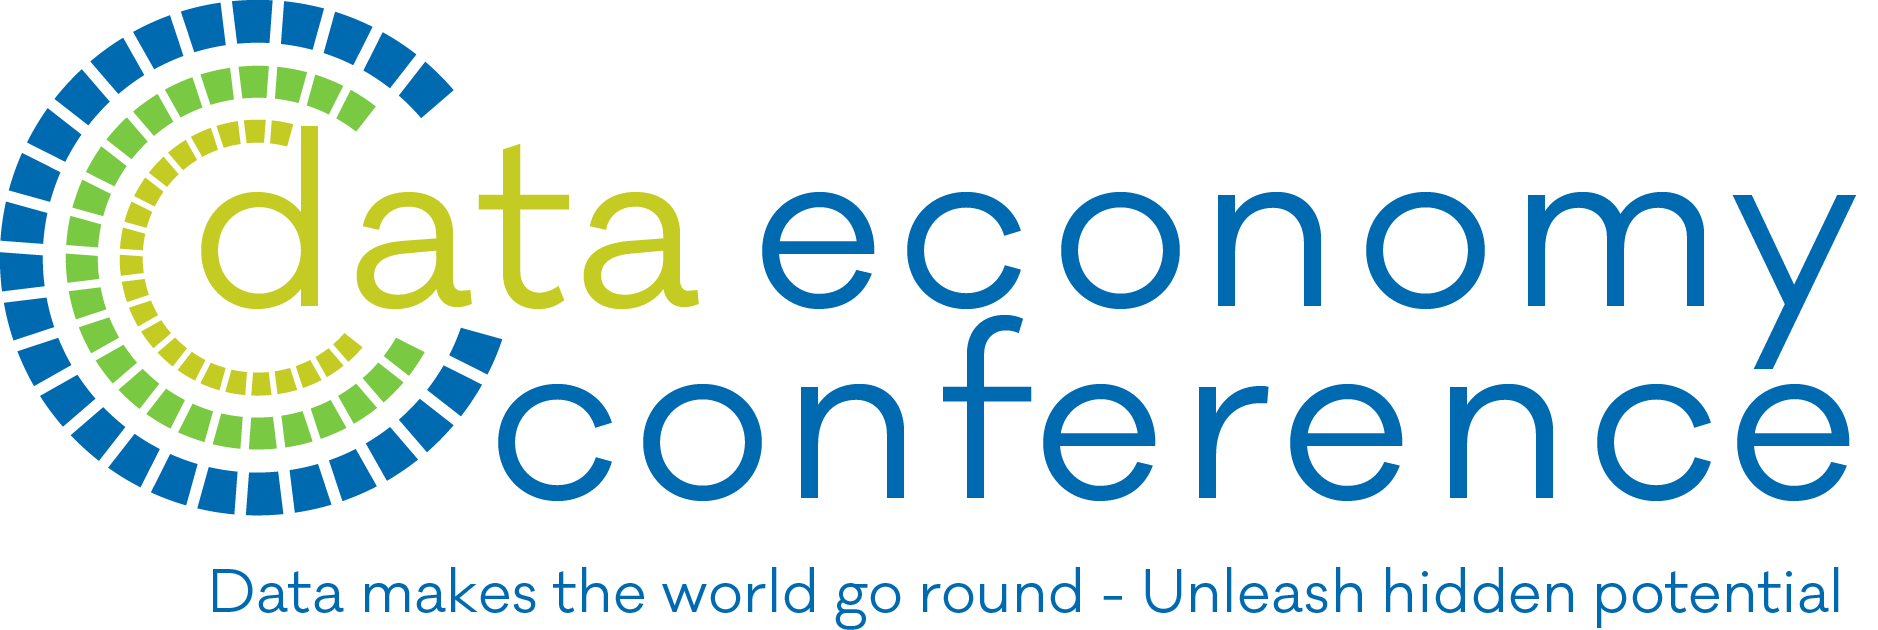 Data Economy Conference